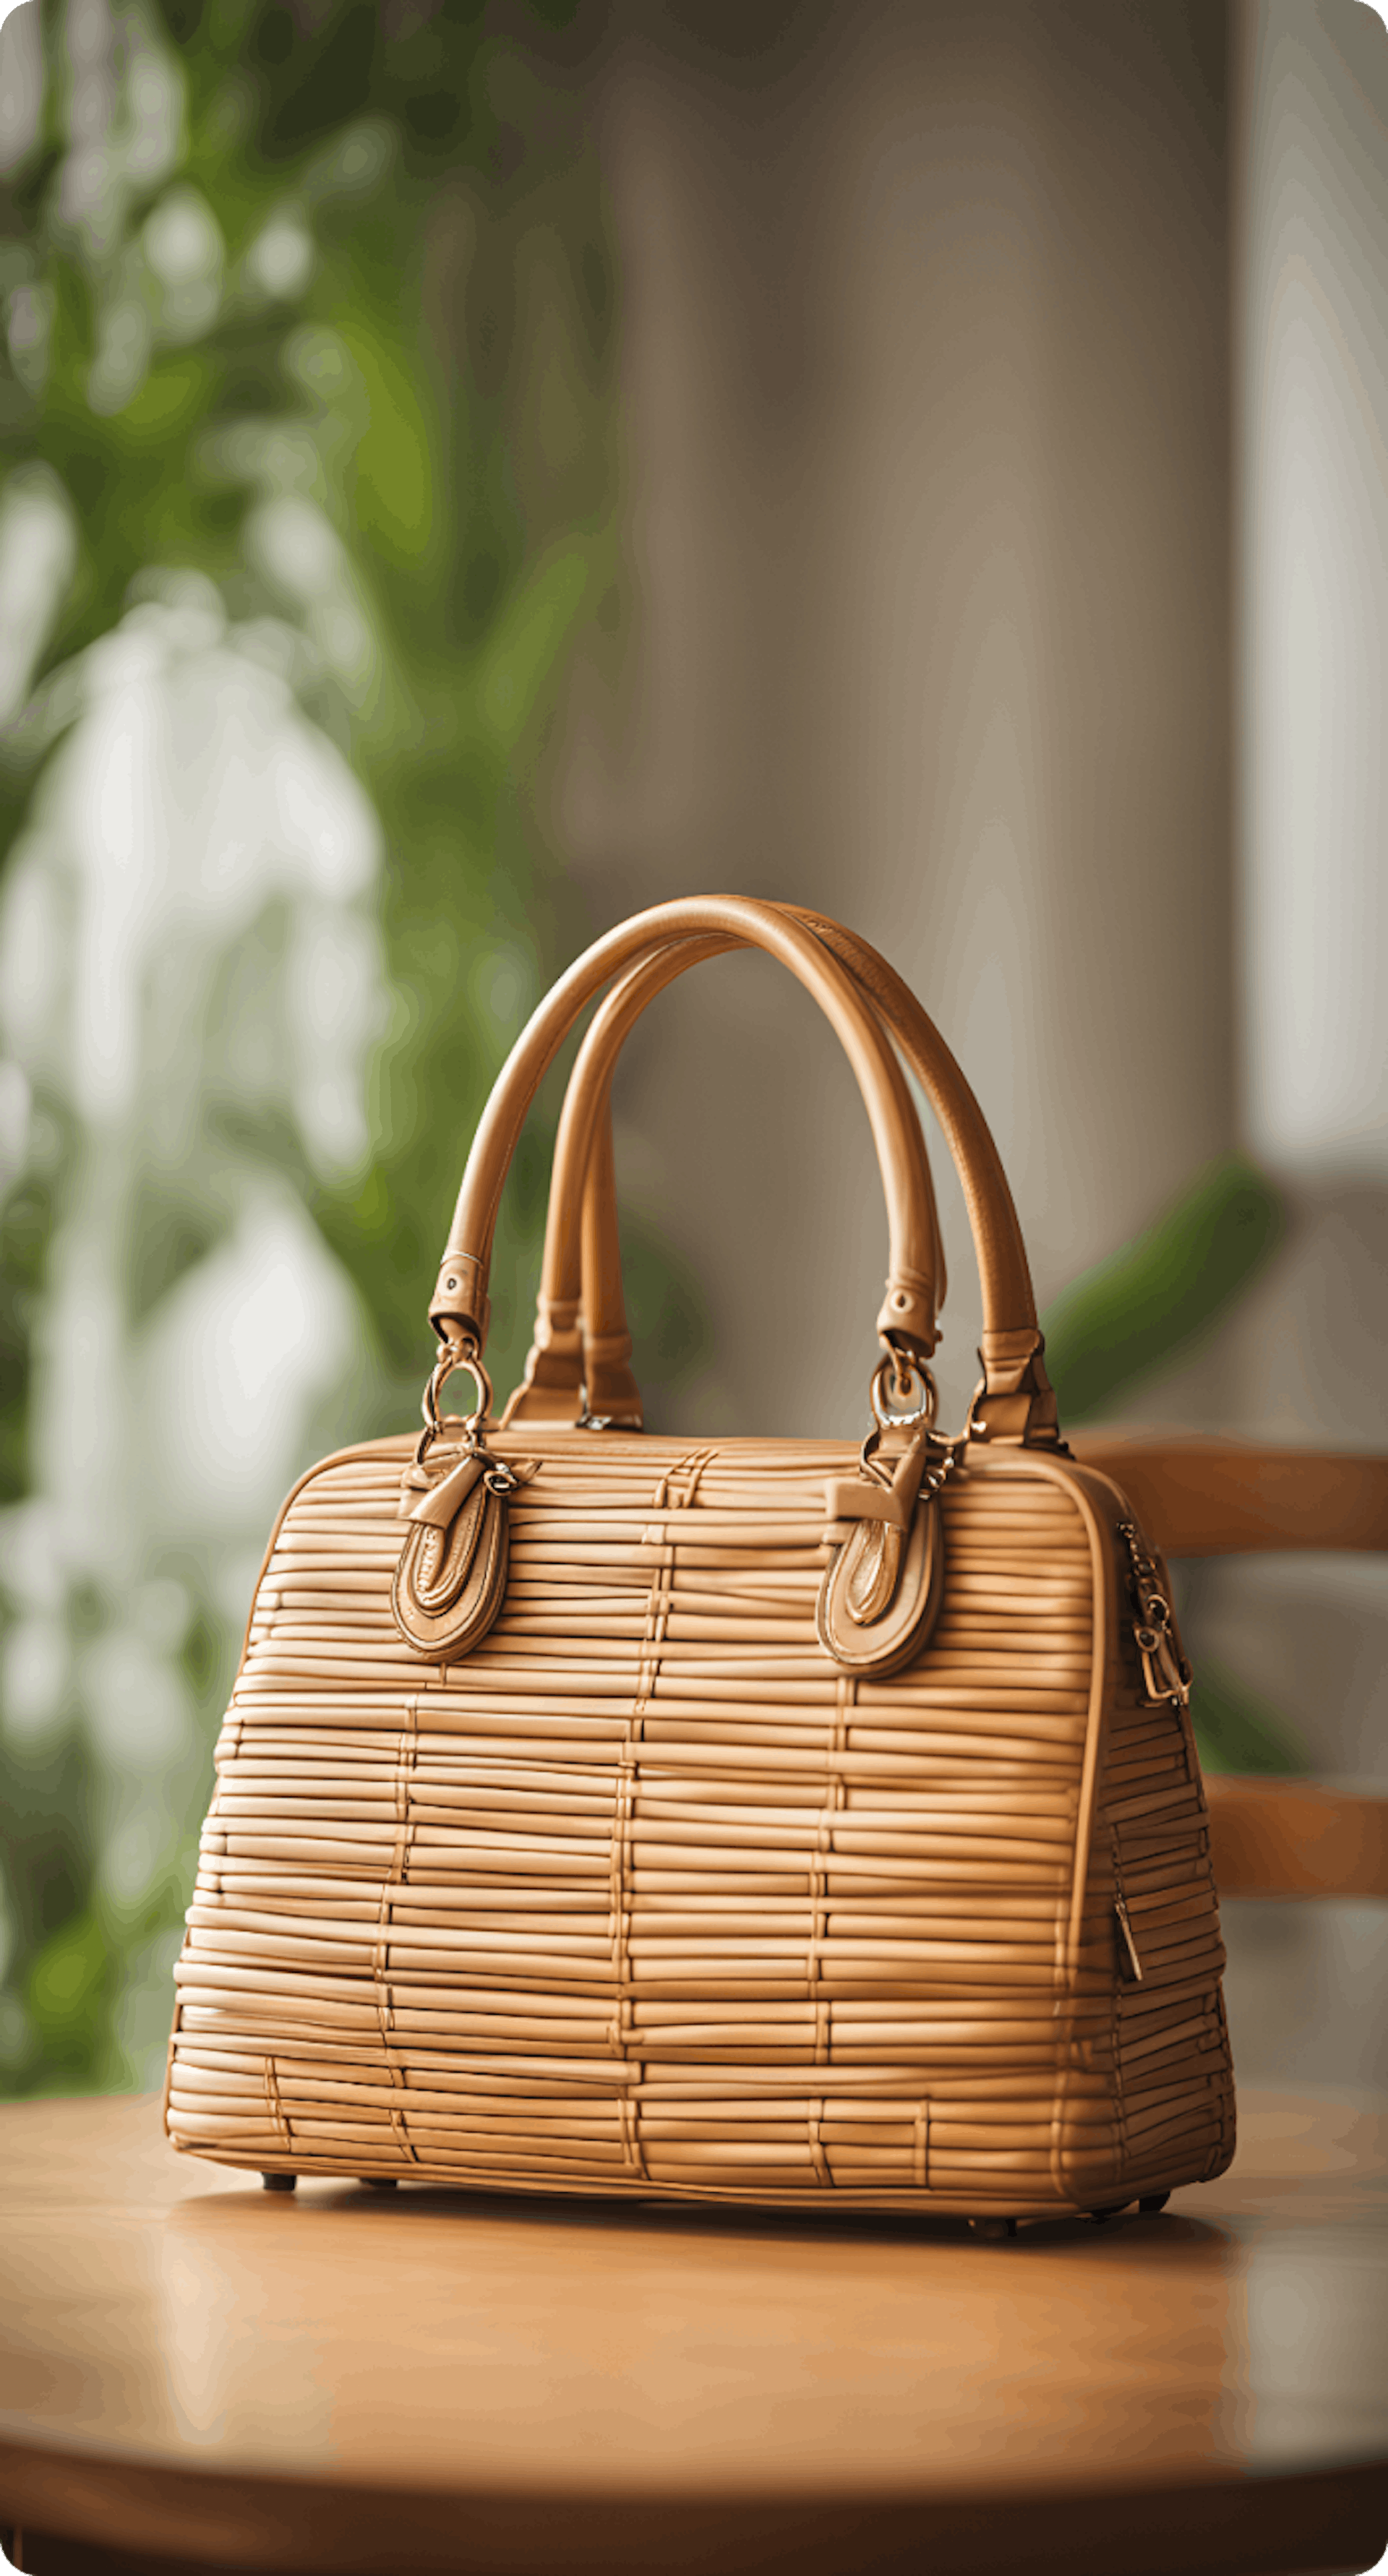 Photograph of a bamboo purse